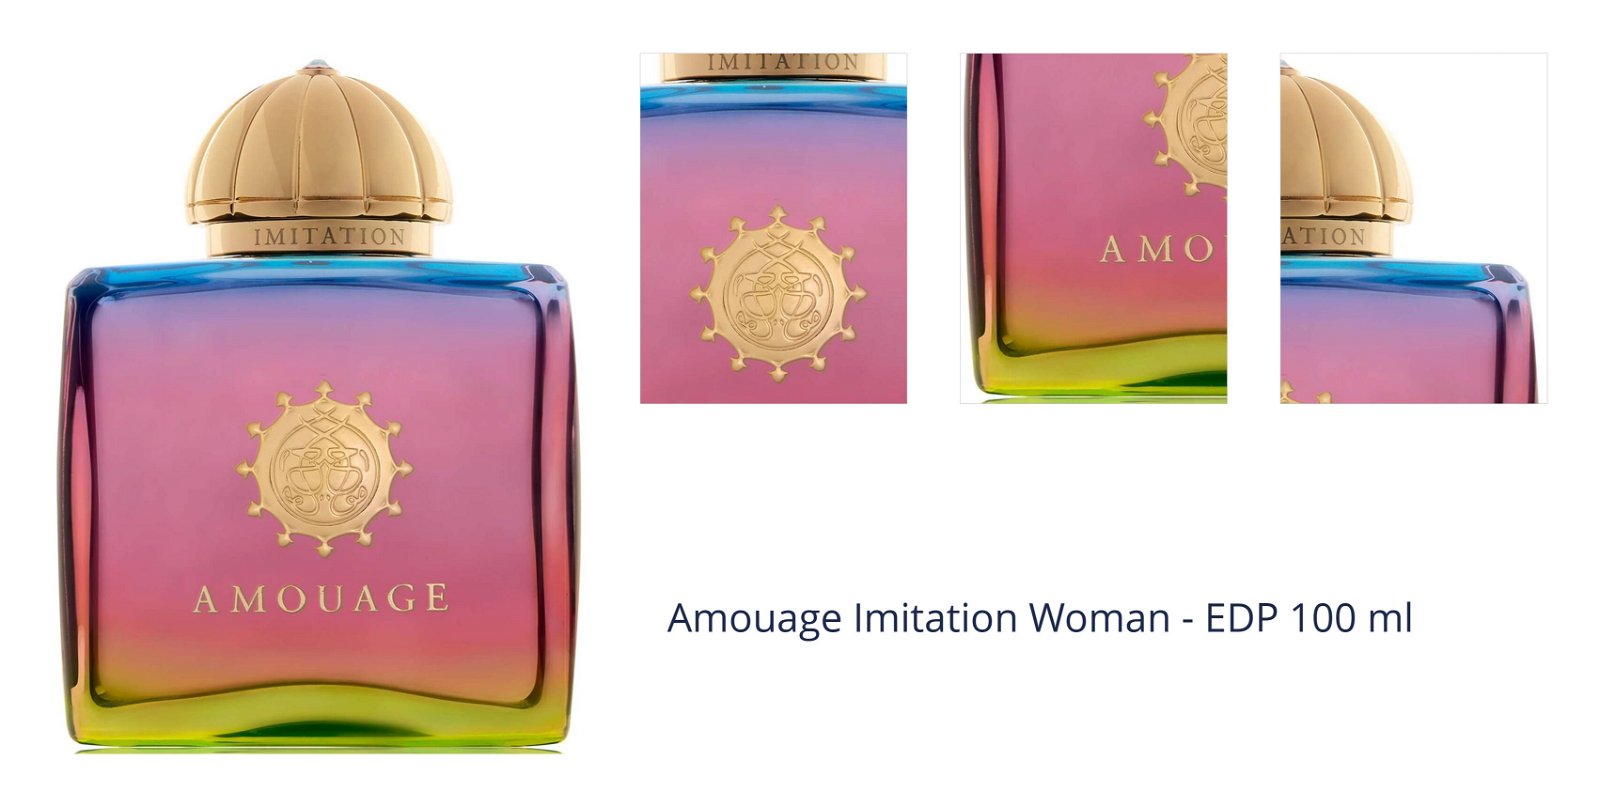 Amouage Imitation Woman - EDP 100 ml 1